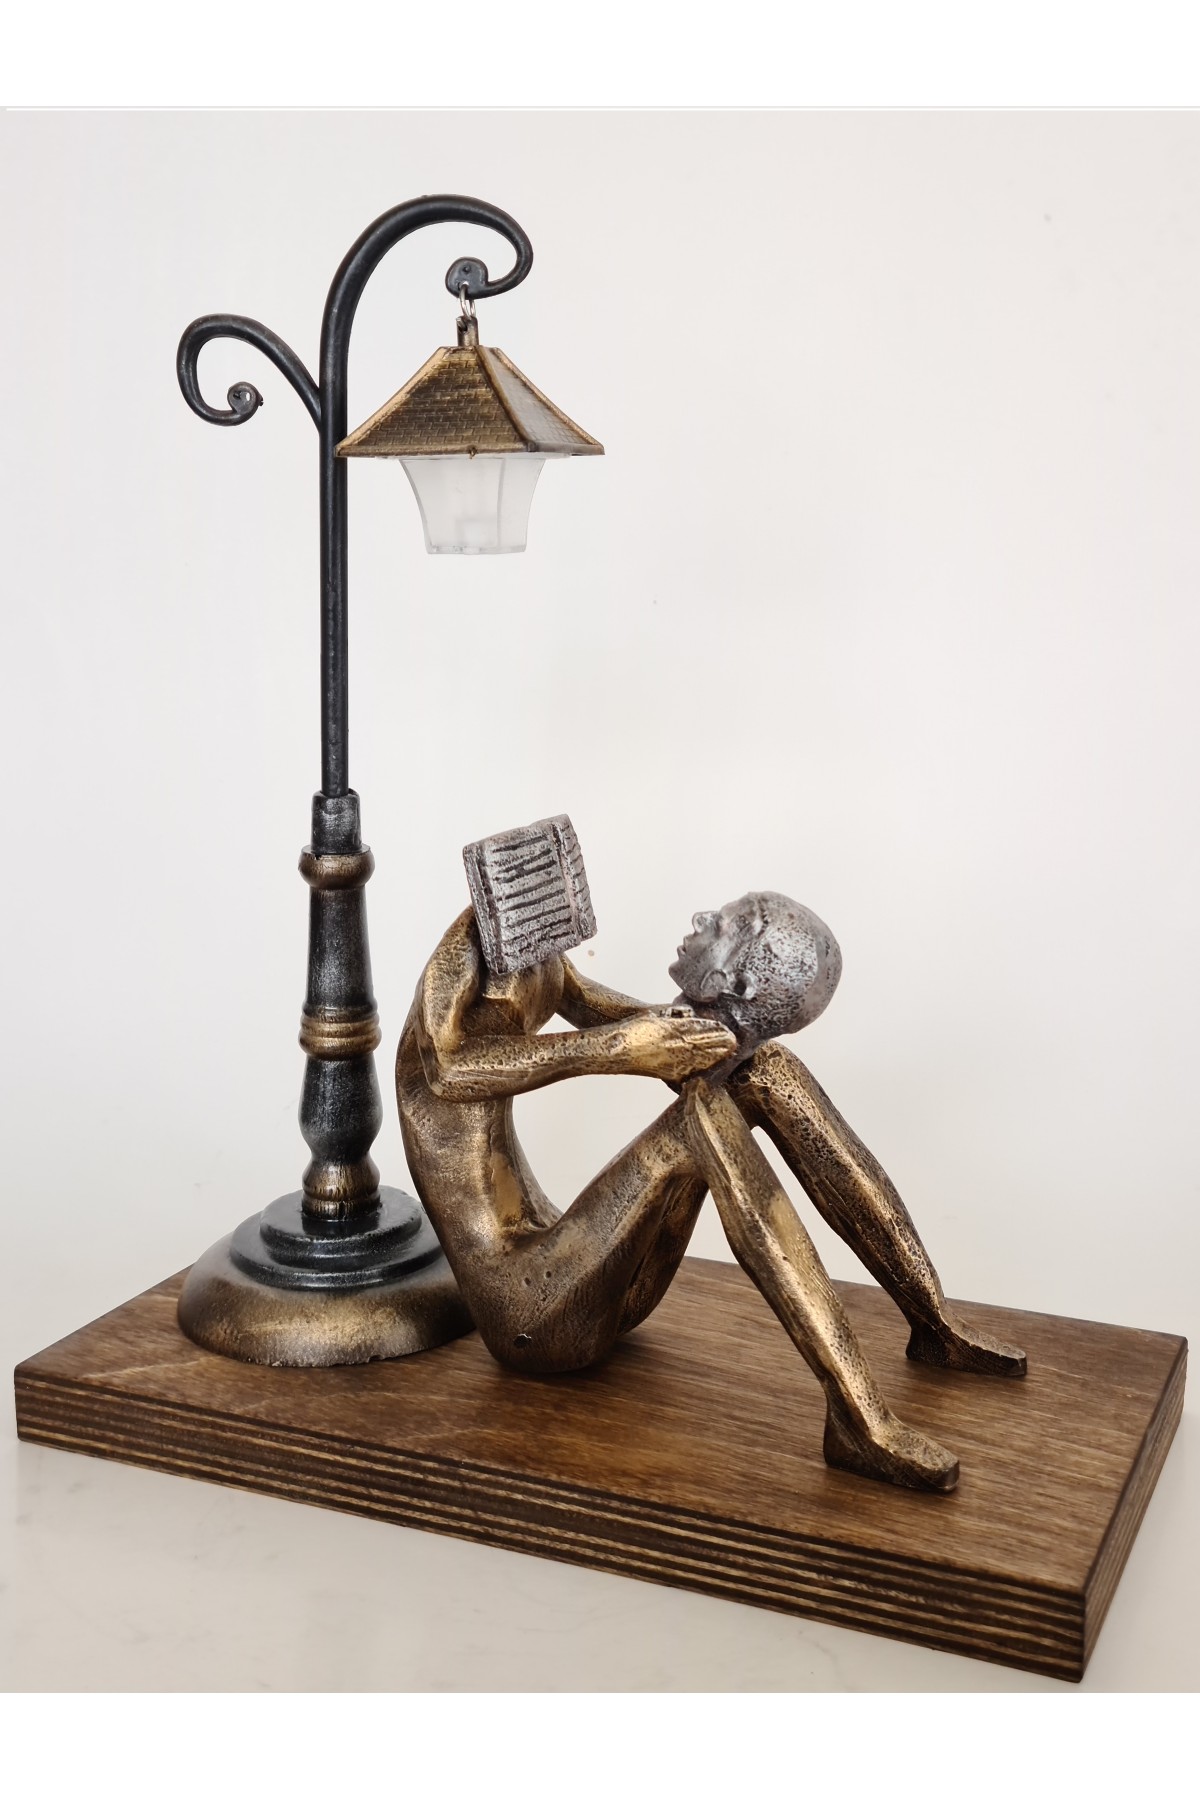 Self Reading Human Street Lamp (Special Design) Wooden Trivet Trinket Decorative Figure